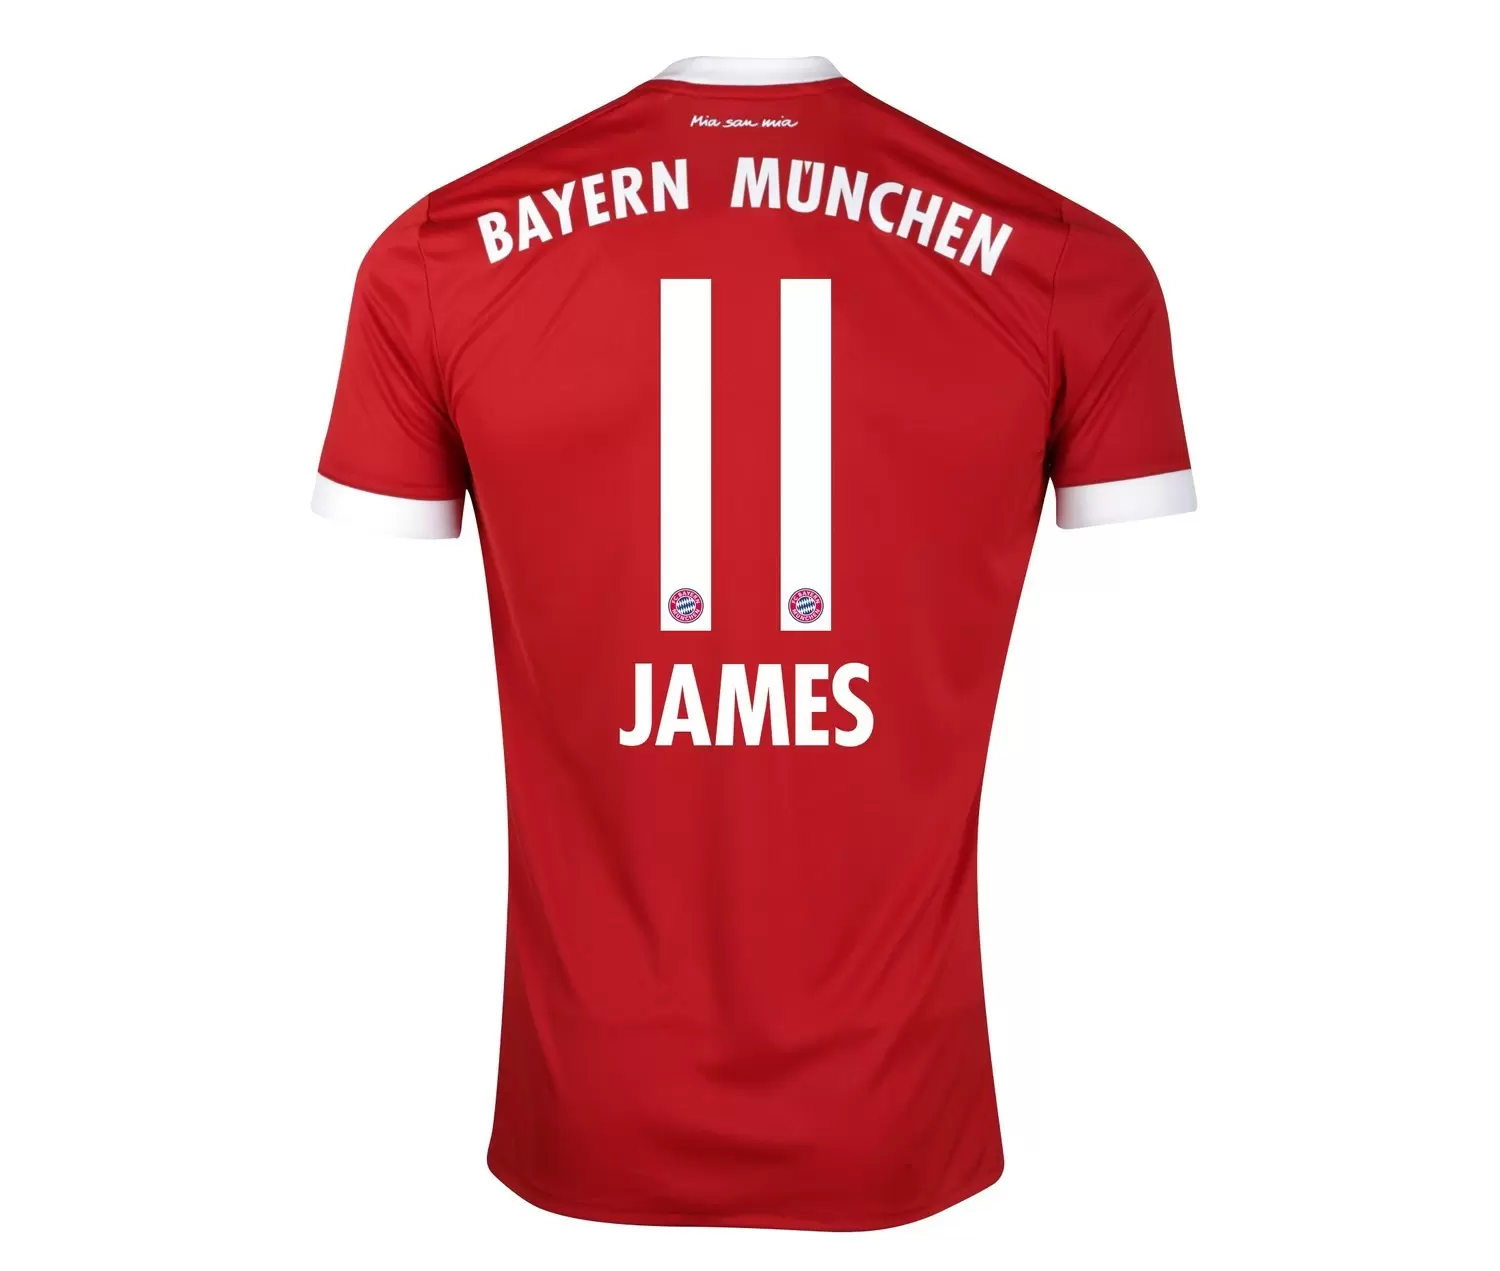 Maillot de football - Bayern Munich James Domicile 2017/2018